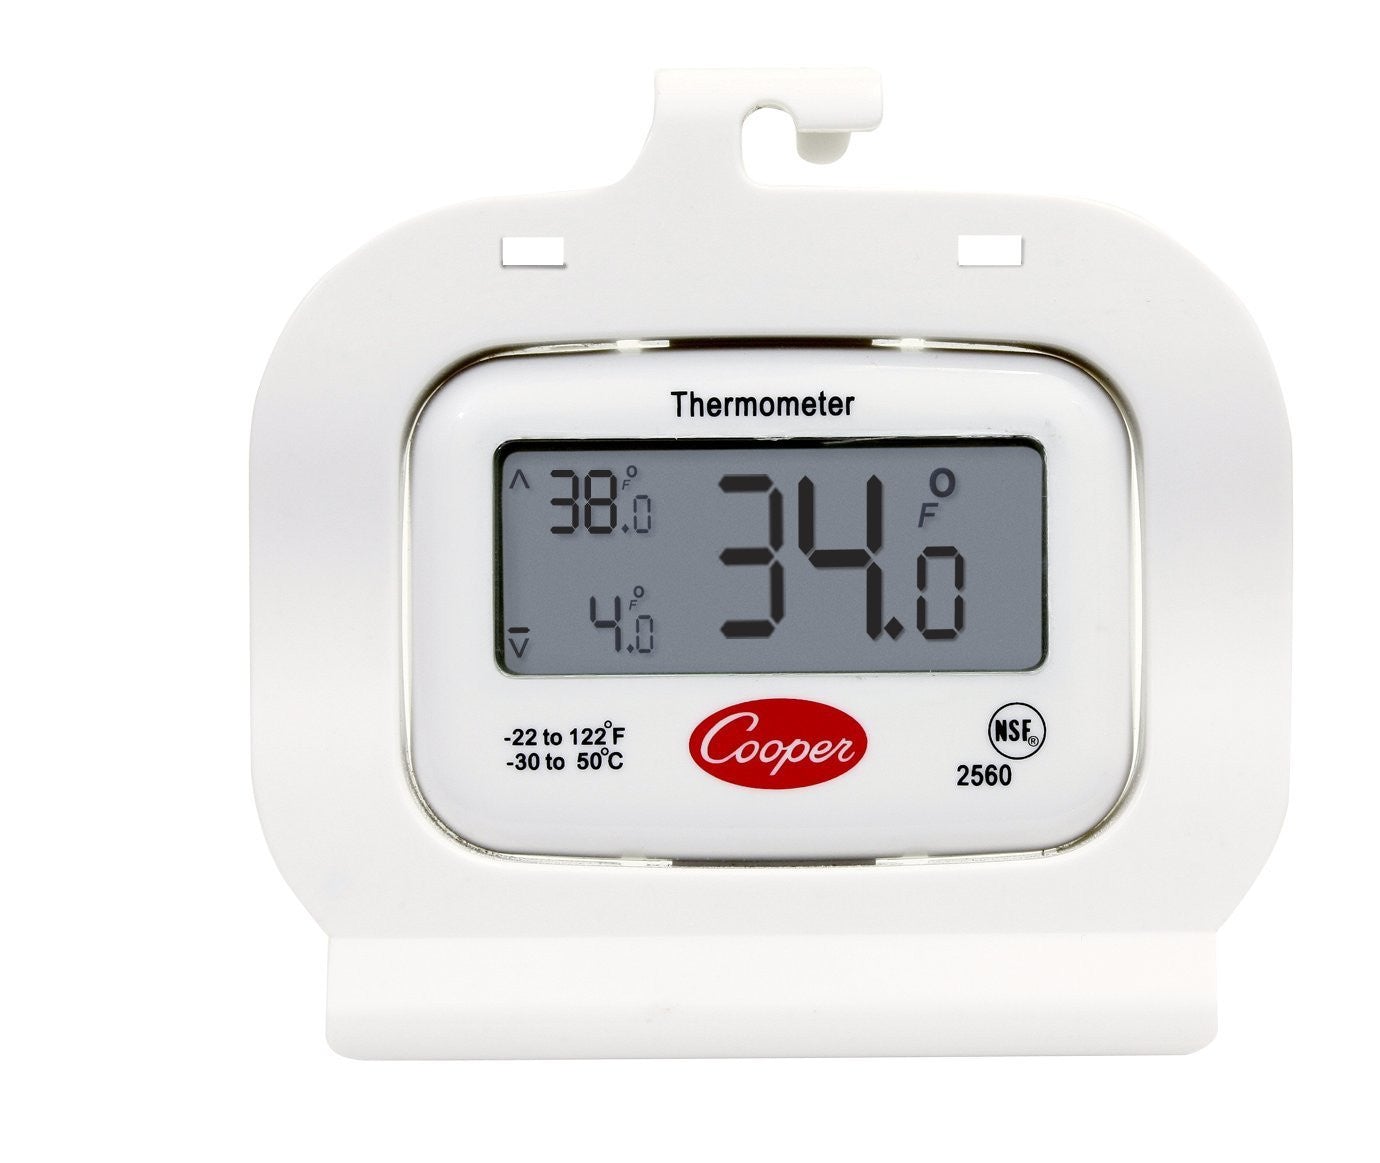 Cooper Atkins 2560 Digital Refrigerator / Freezer Thermometer